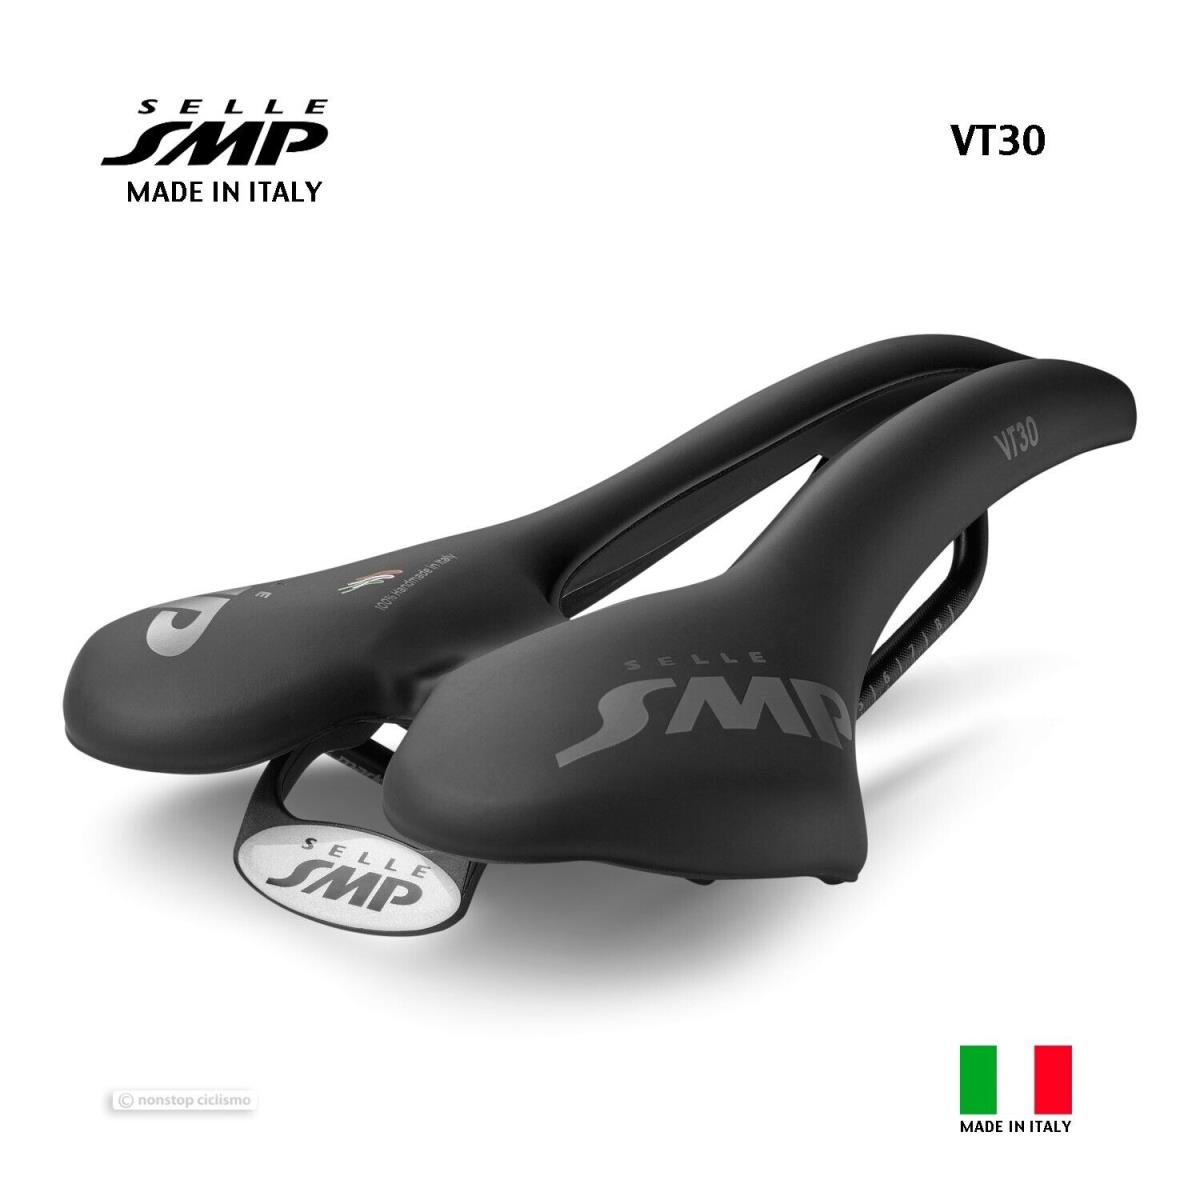 Selle Smp VT30 Saddle : Velvet Touch Black - Made IN Italy